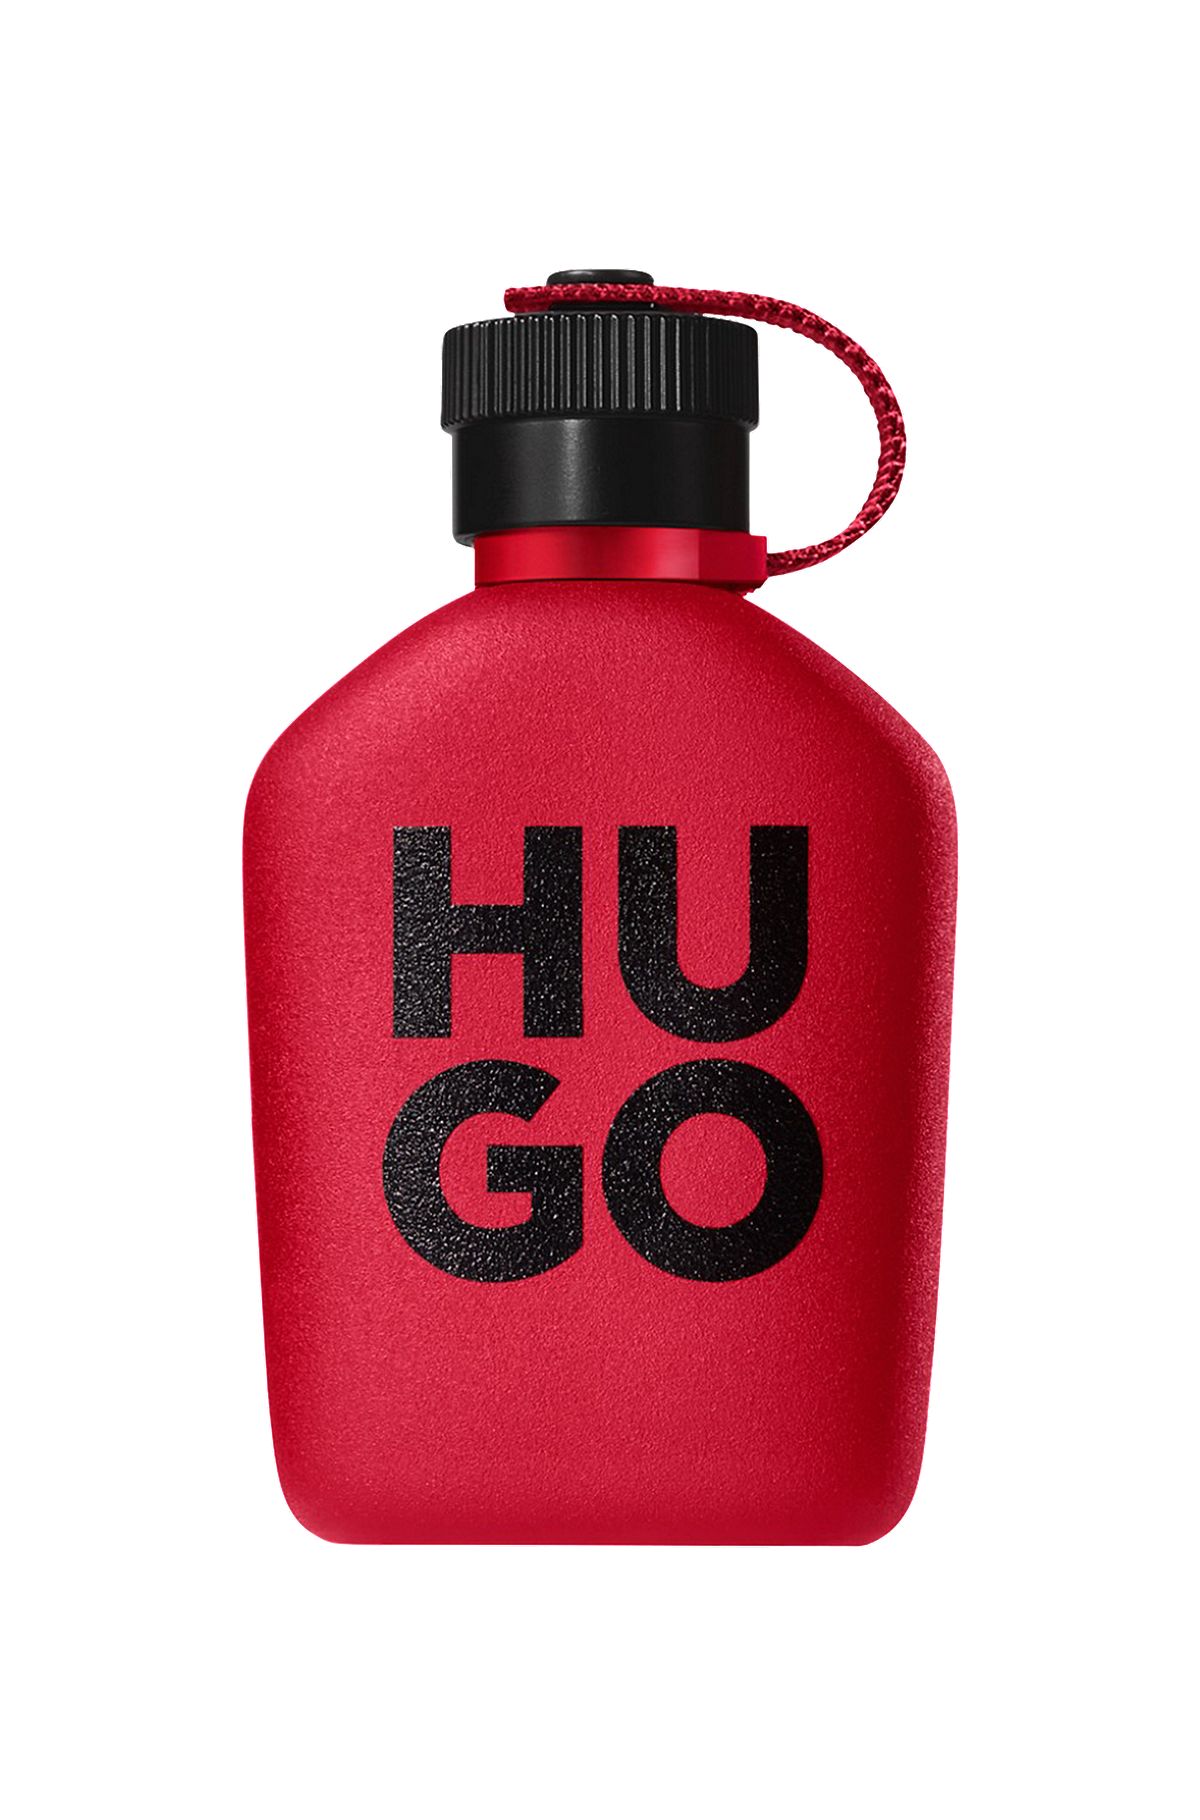 Hugo Boss: Perfumes, colonias y cosmética masculina ✔️ DOUGLAS